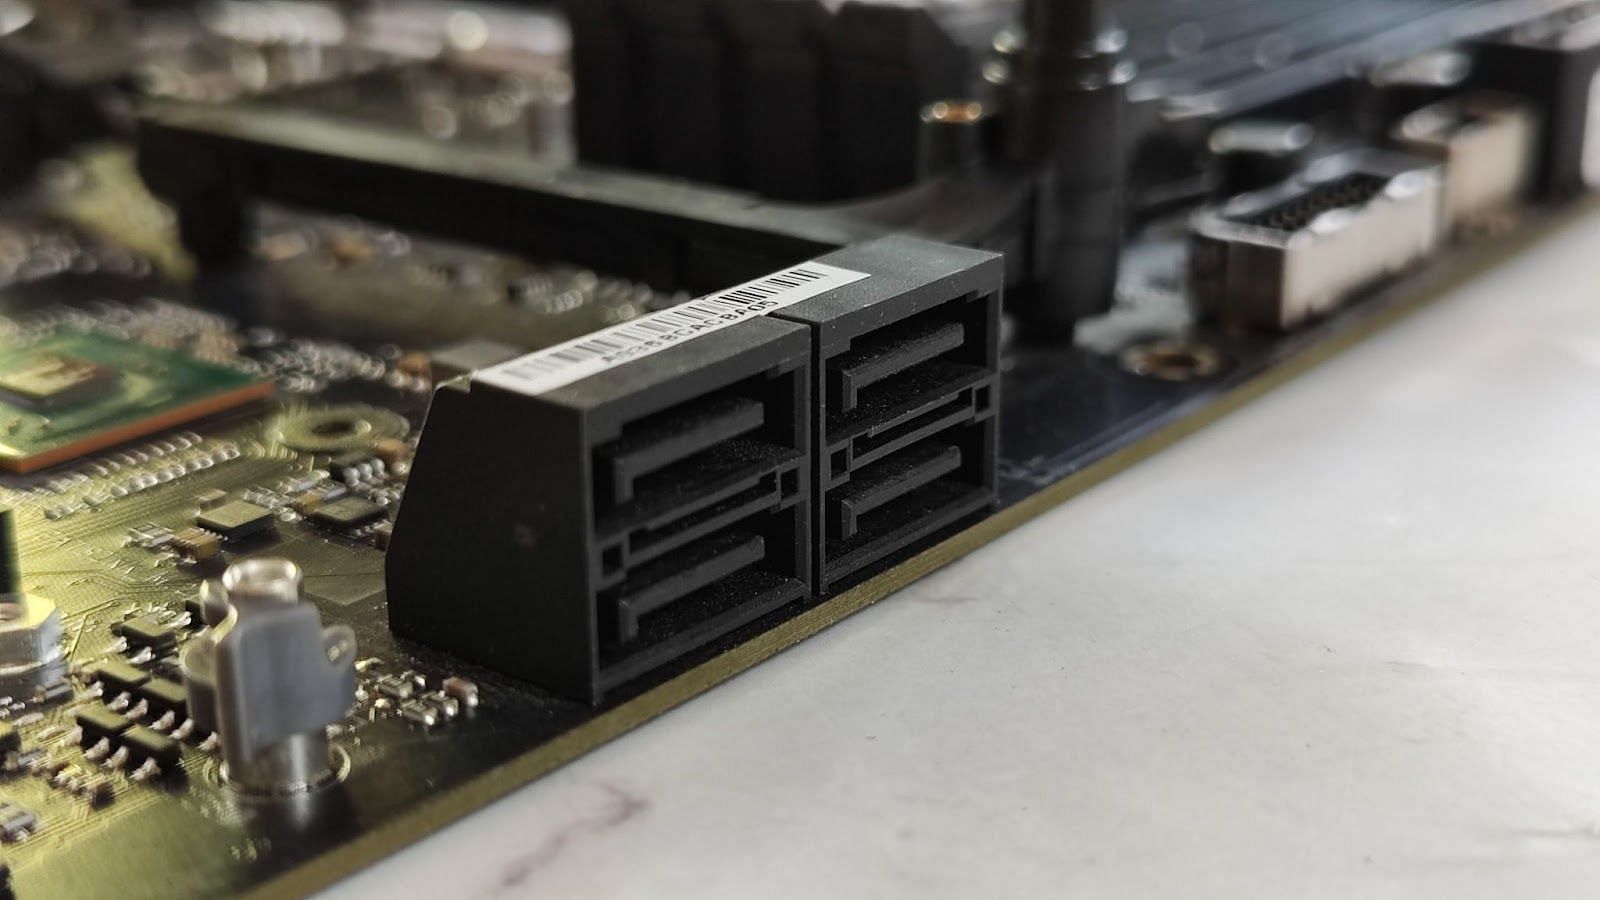 The SATA ports on the ROG Strix X670E motherboard (Image via Sportskeeda)